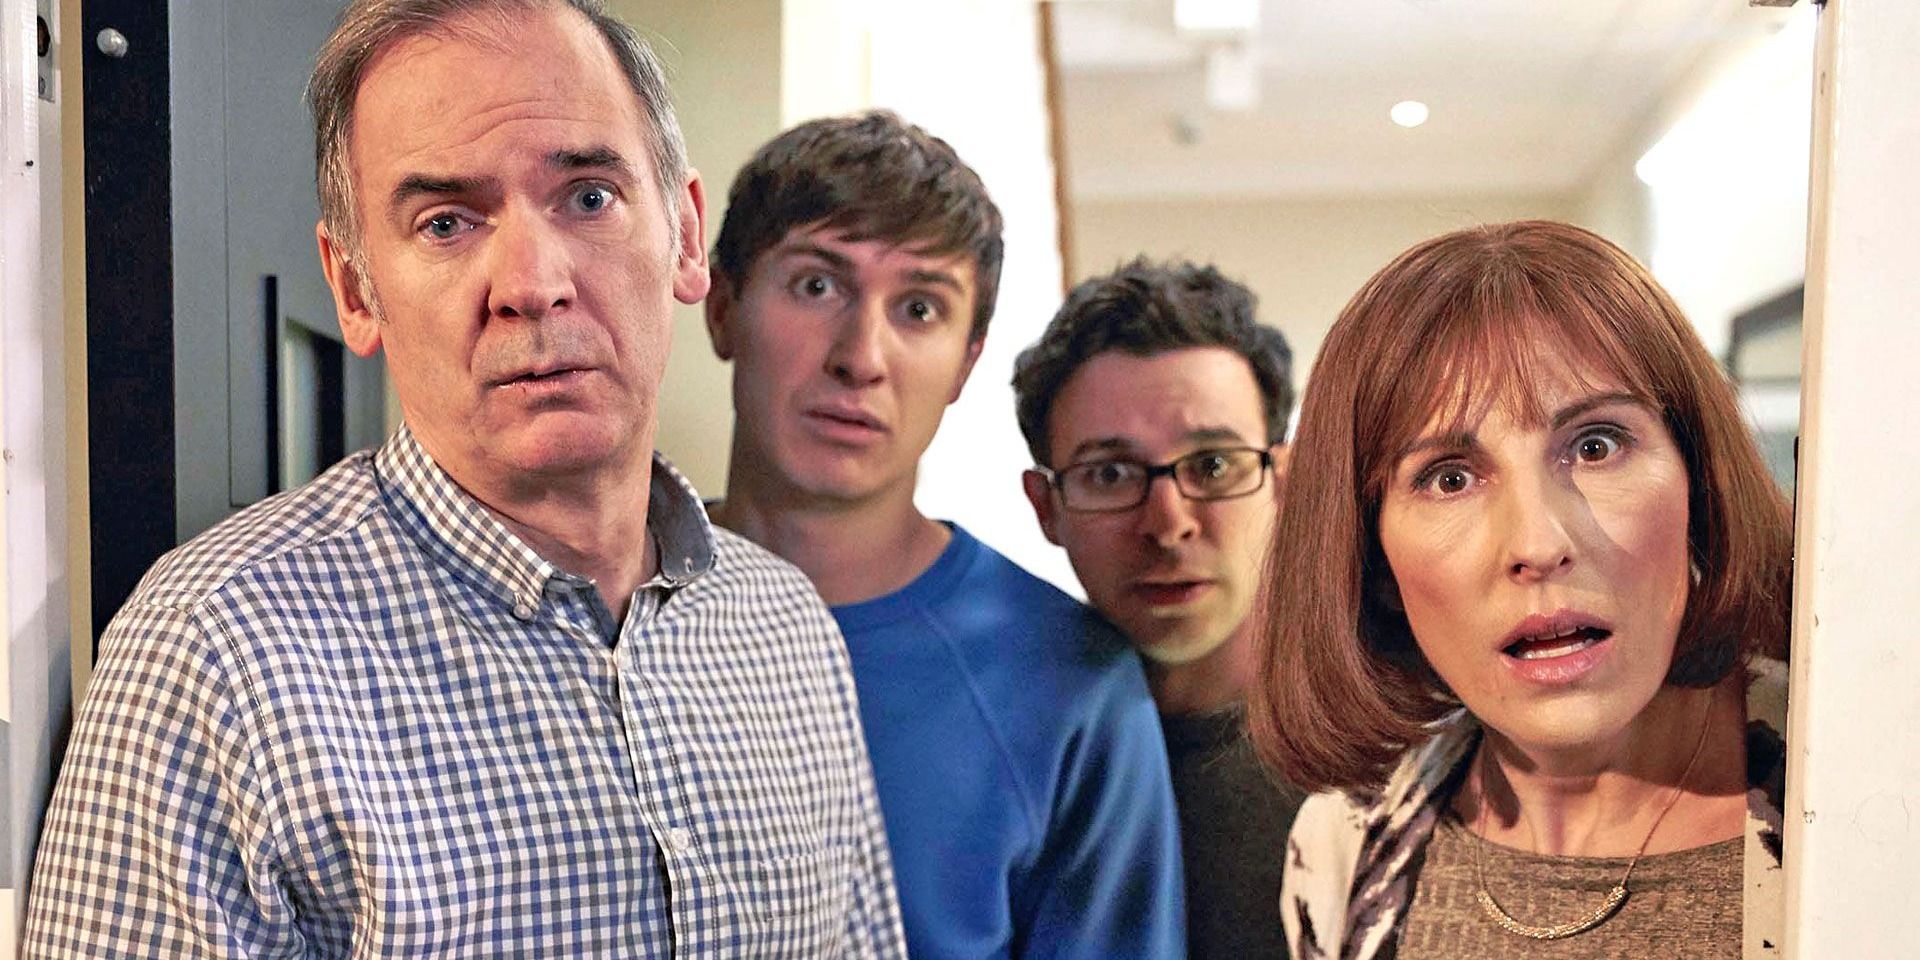 10 Underrated British Comedies On Netflix